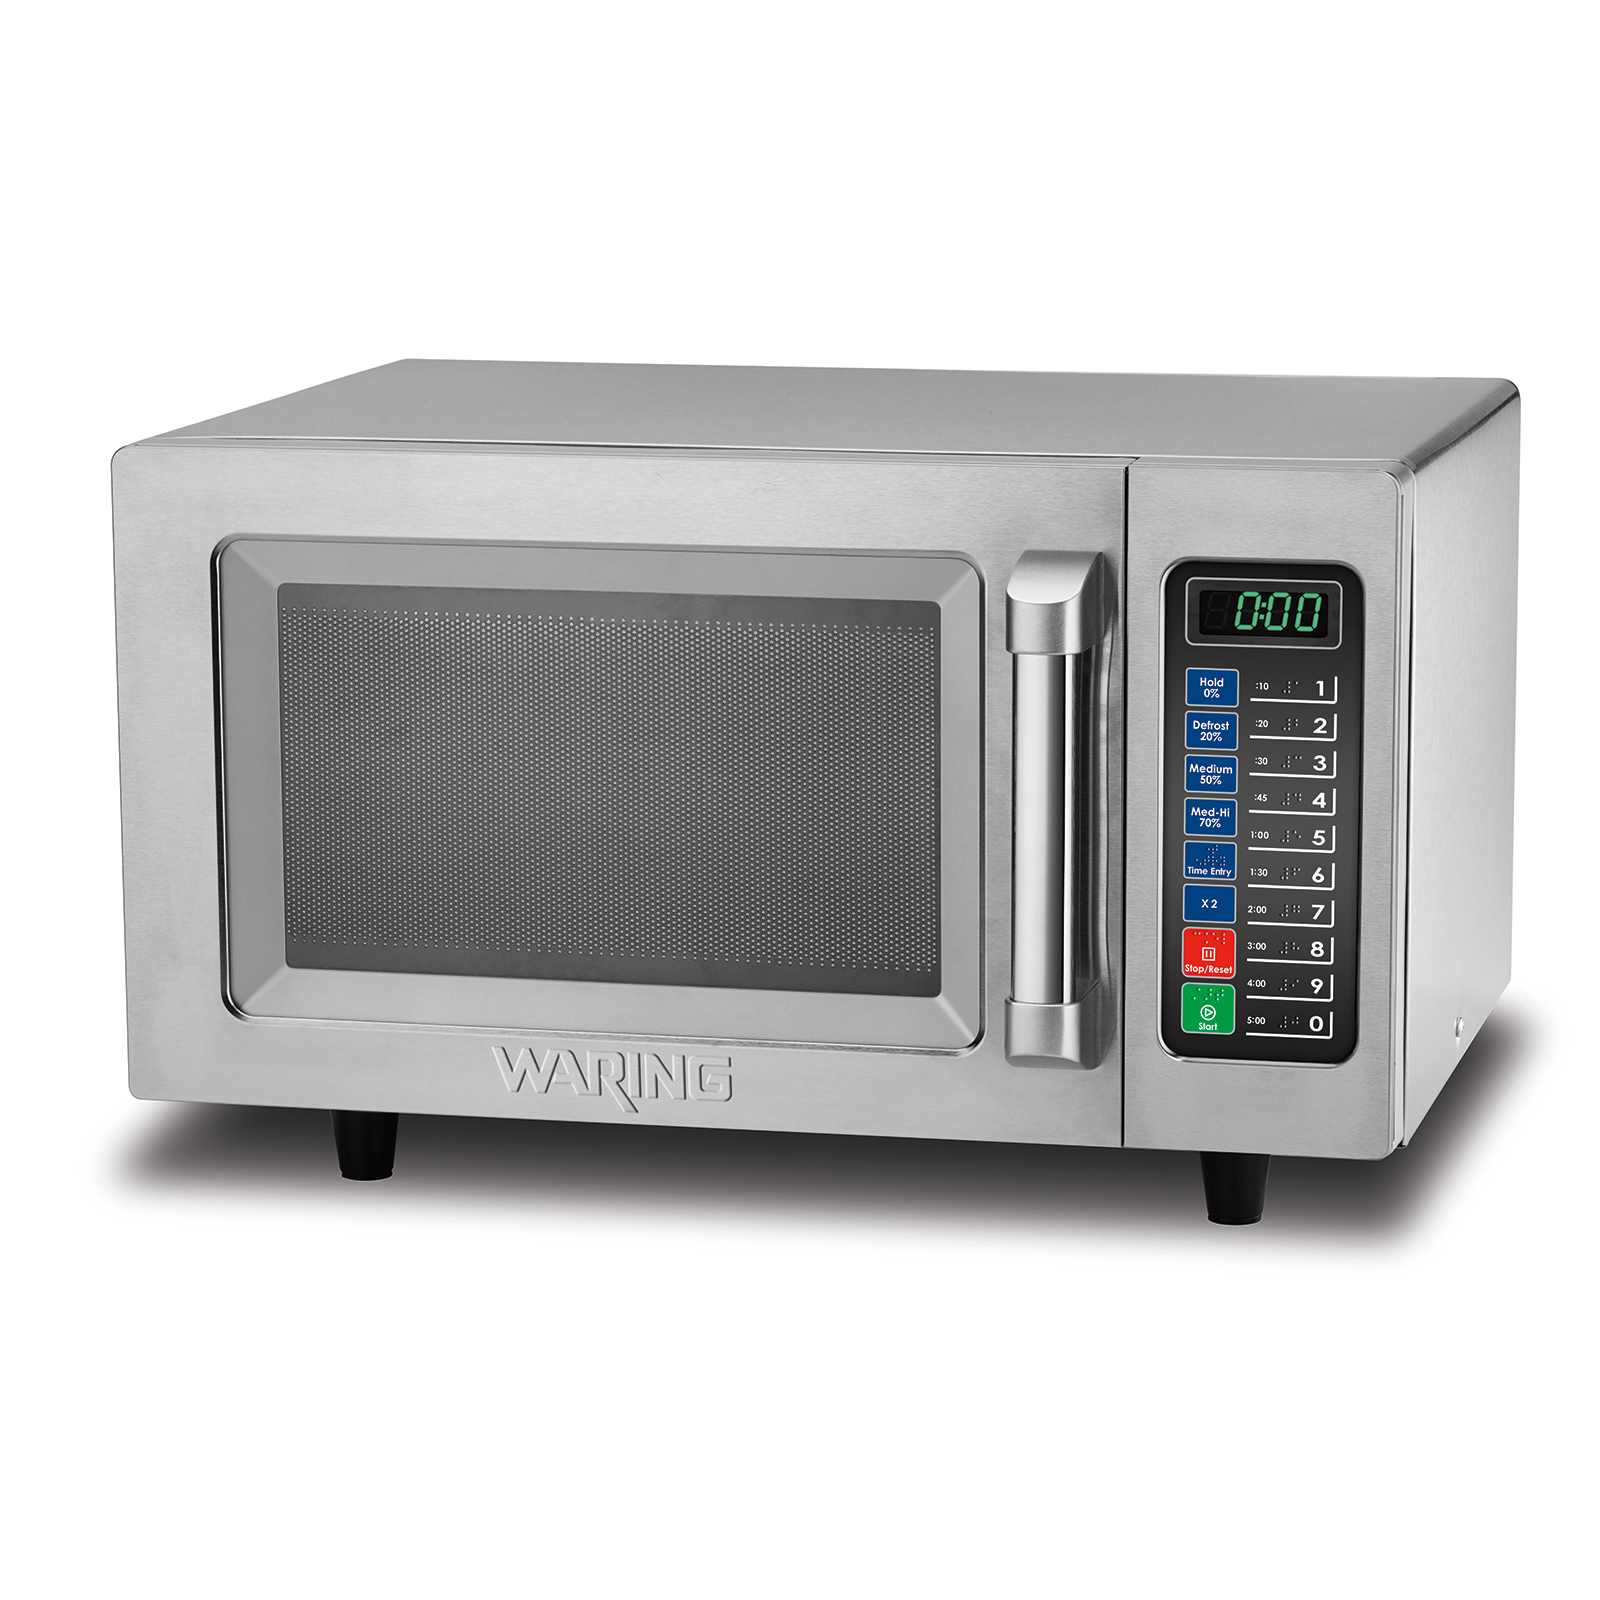 Waring WMO90 Microwave Oven